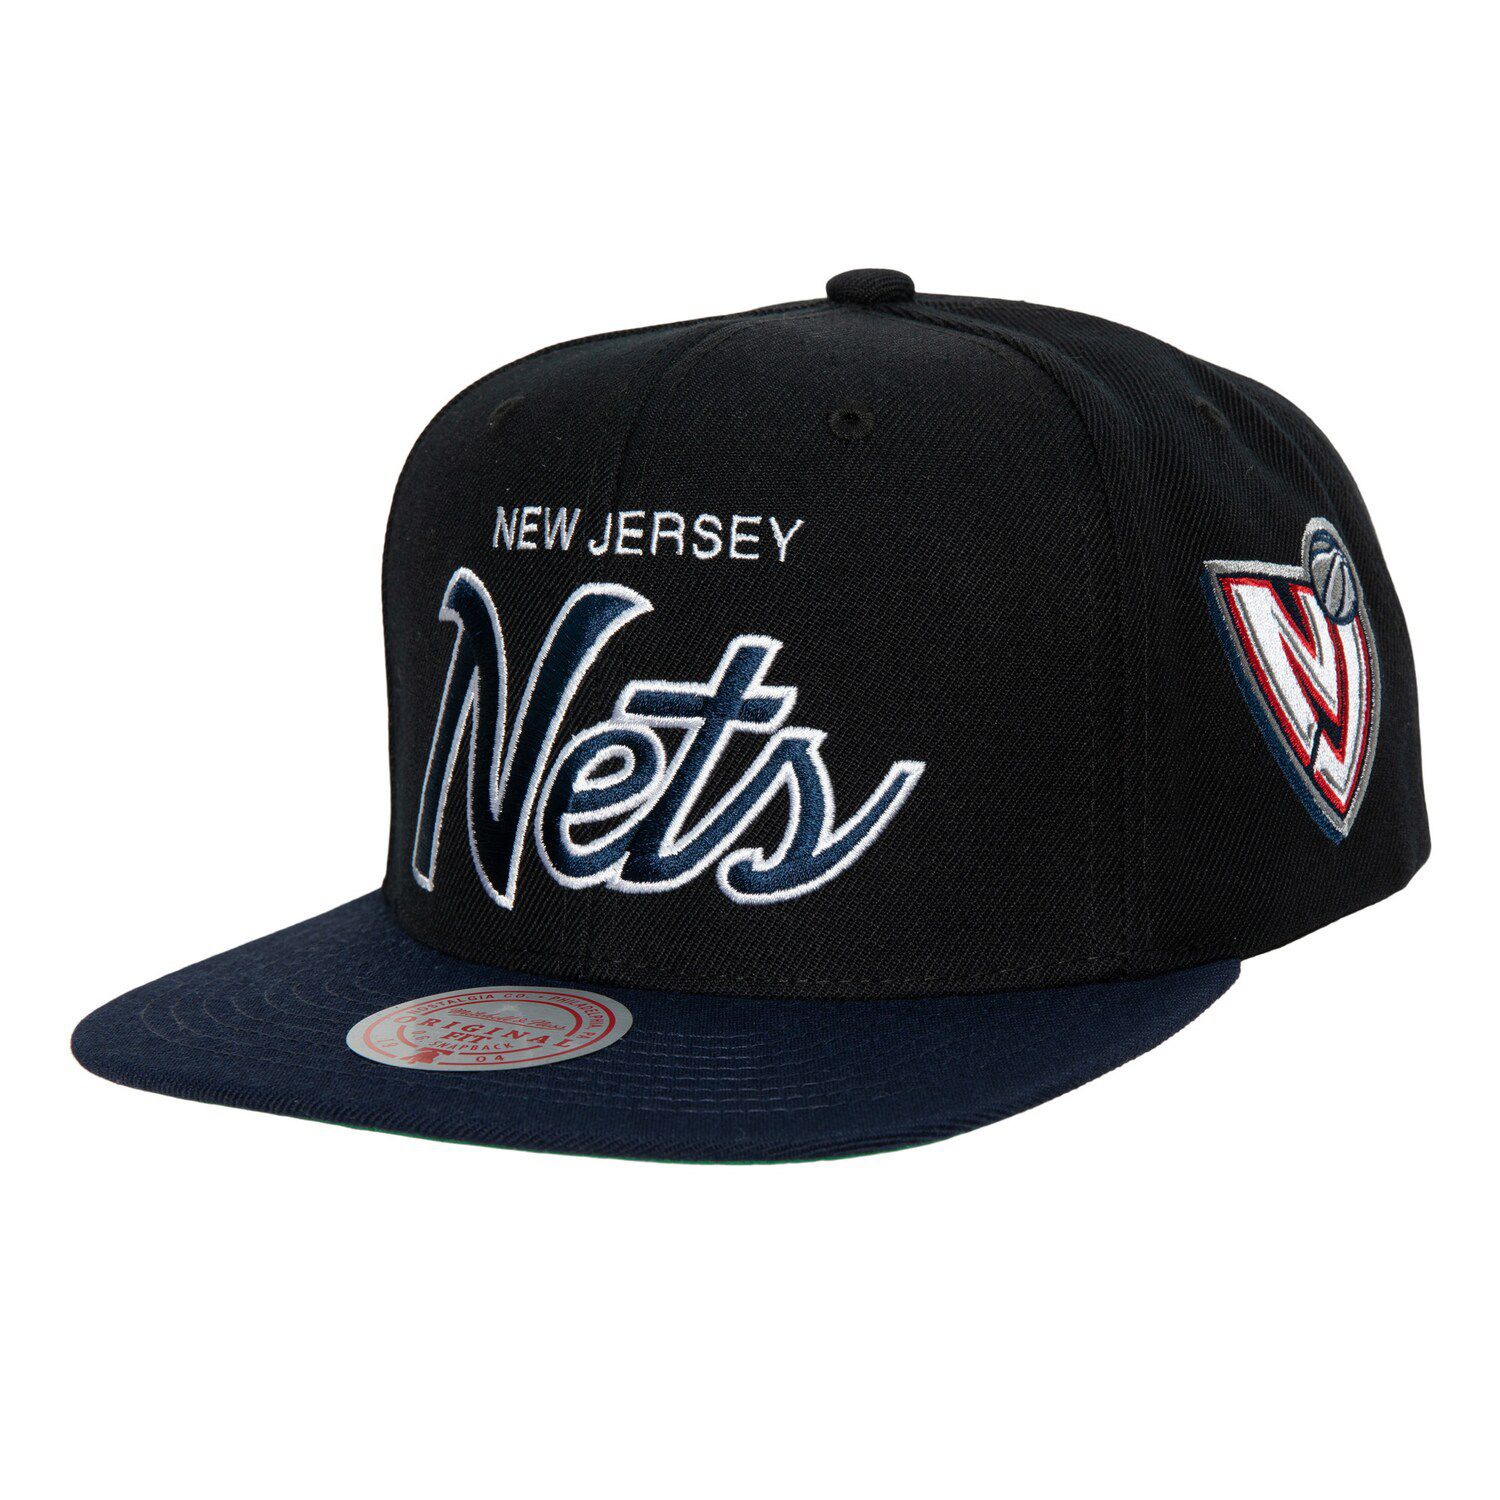 Mitchell & Ness x Lids Olive New Jersey Nets Dusty NBA Draft Hardwood Classics Fitted Hat